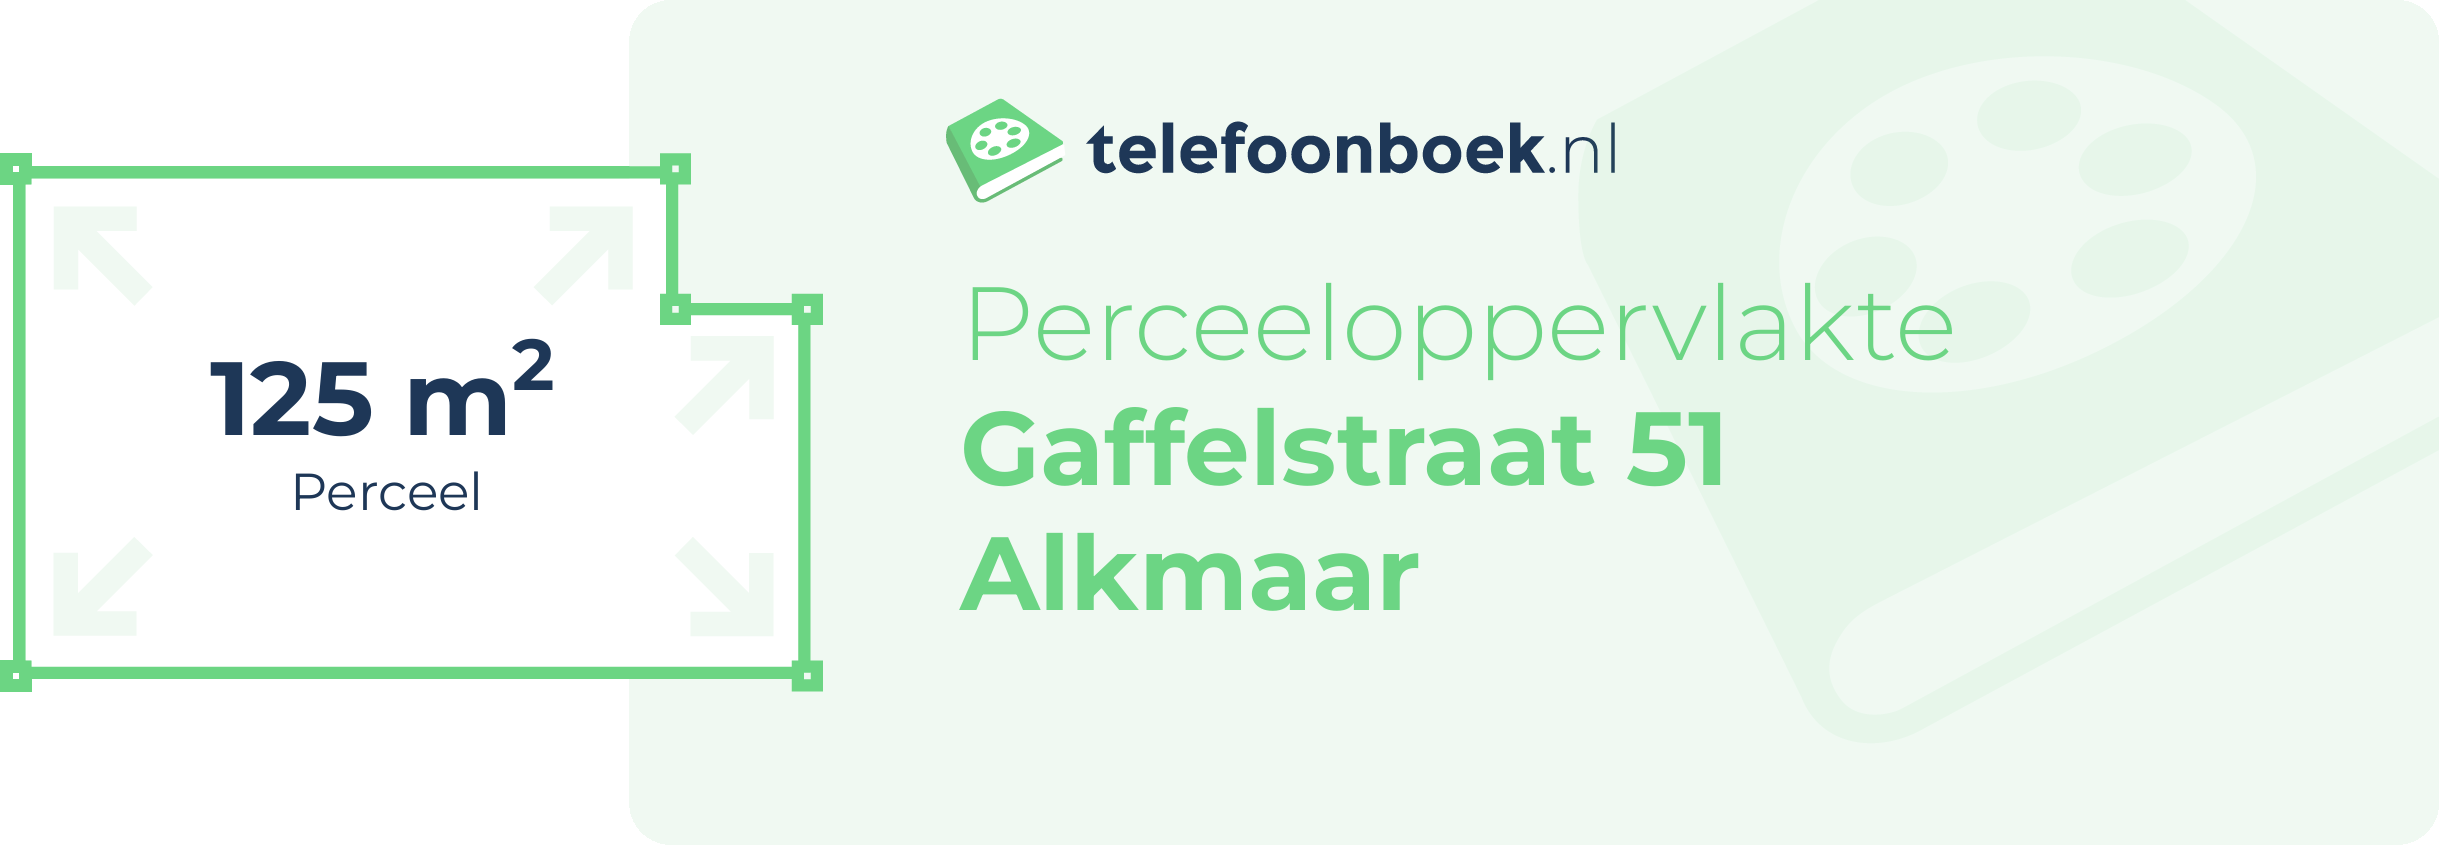 Perceeloppervlakte Gaffelstraat 51 Alkmaar